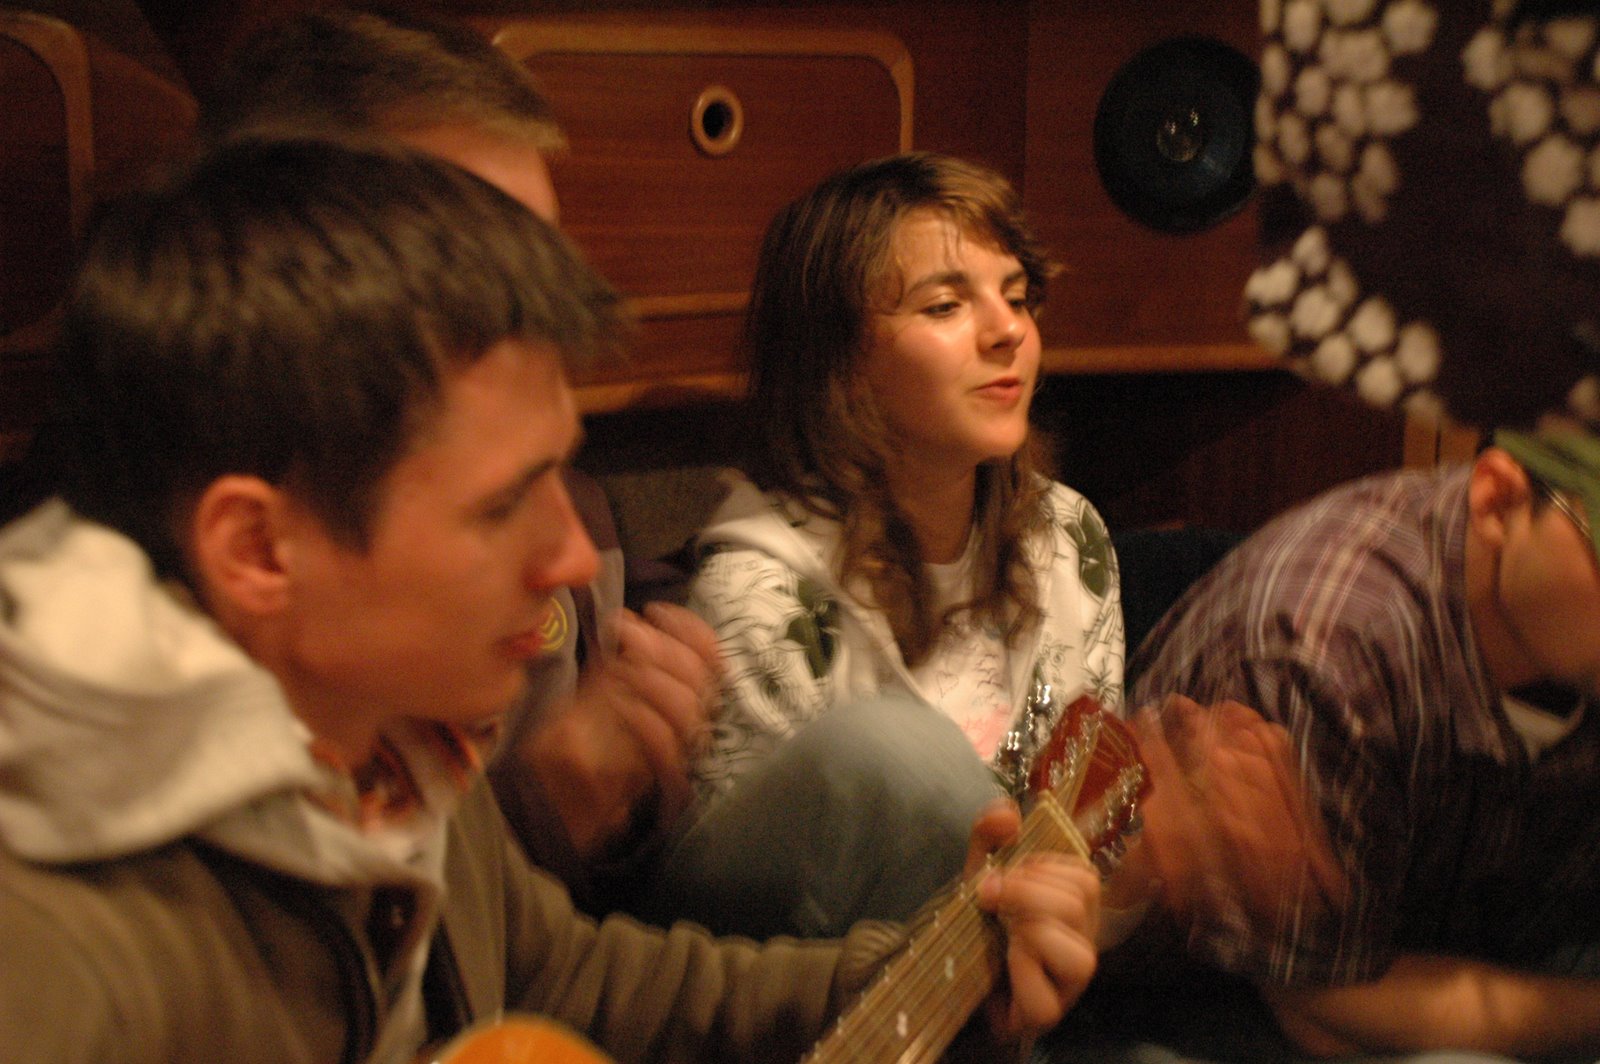 Marcin playing the guitar and Anna singing polish folk songs..